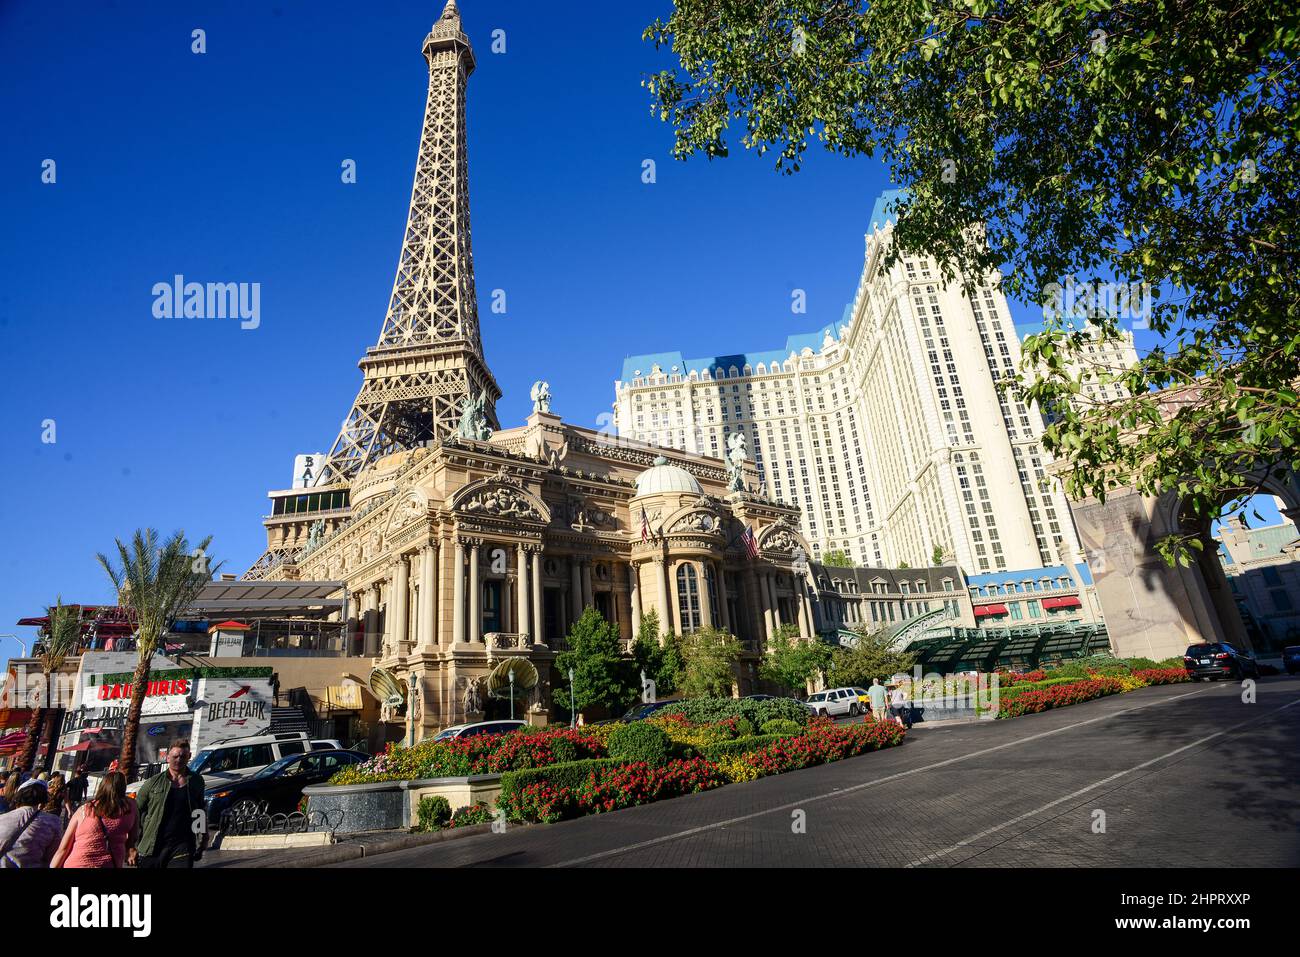 Eiffel Tower Restaurant Las Vegas Nevada Stock Photo 724517434